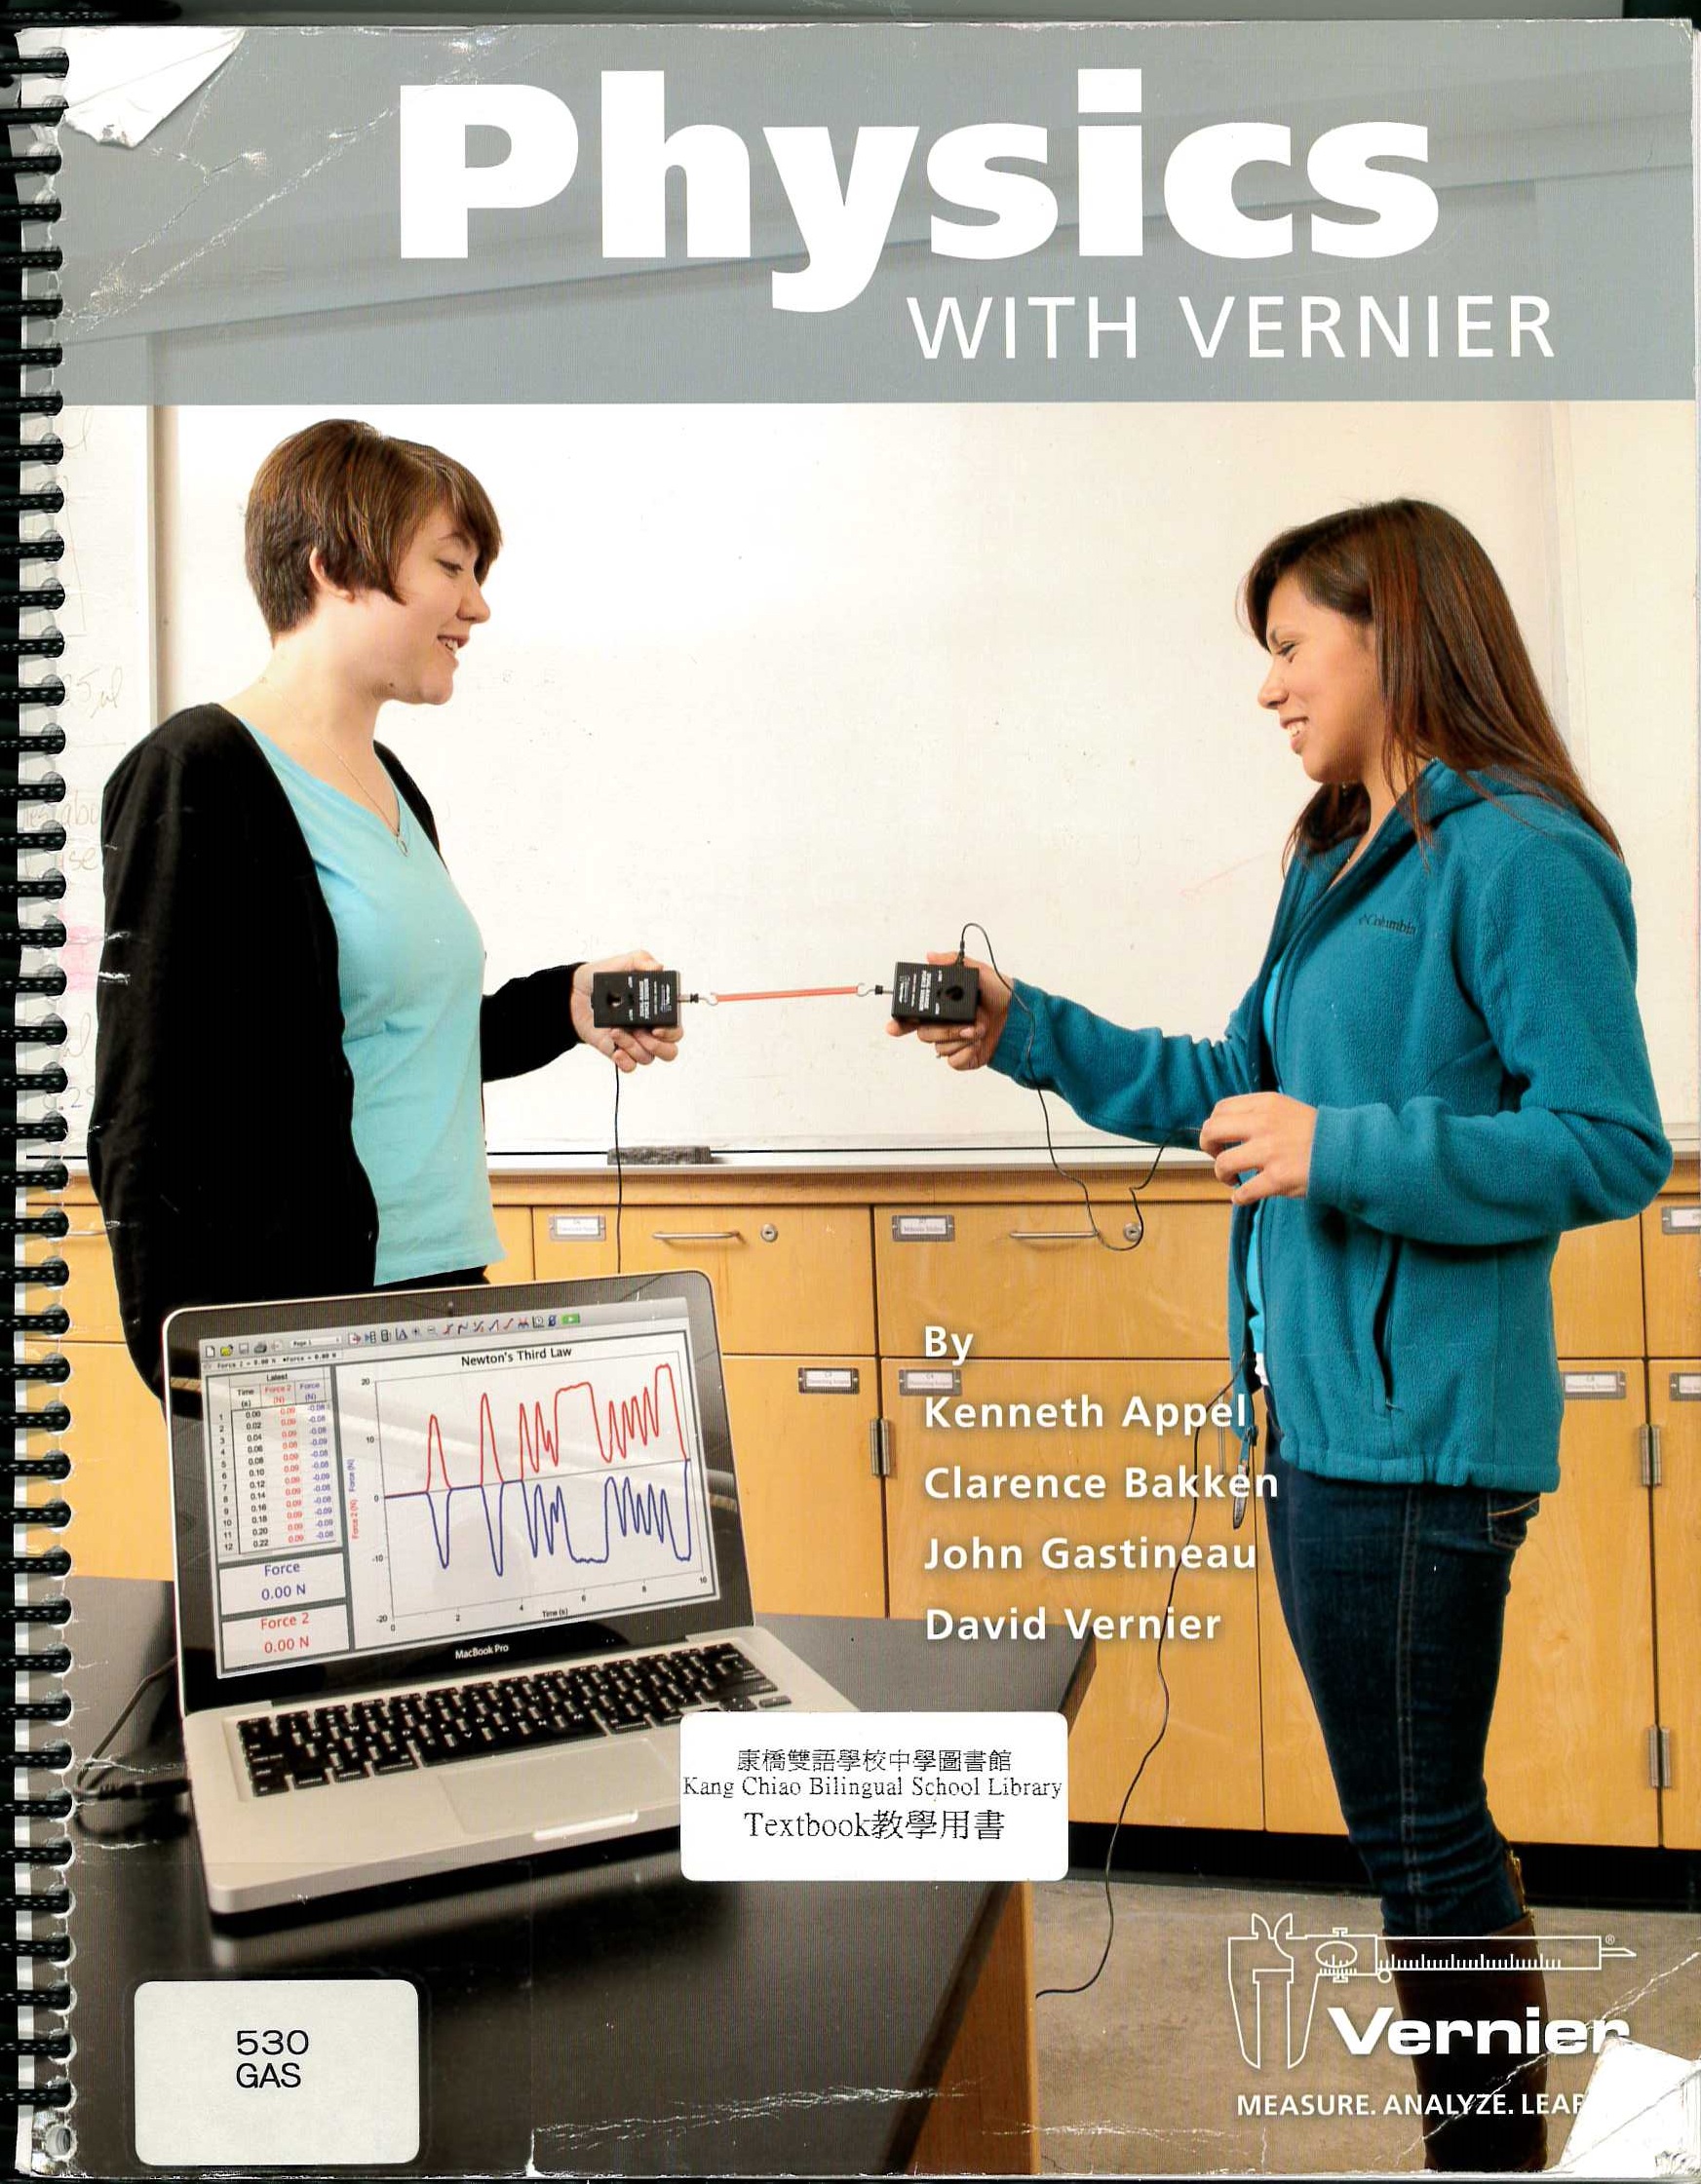 Physics with Vernier  : physics experiments using Vernier sensors